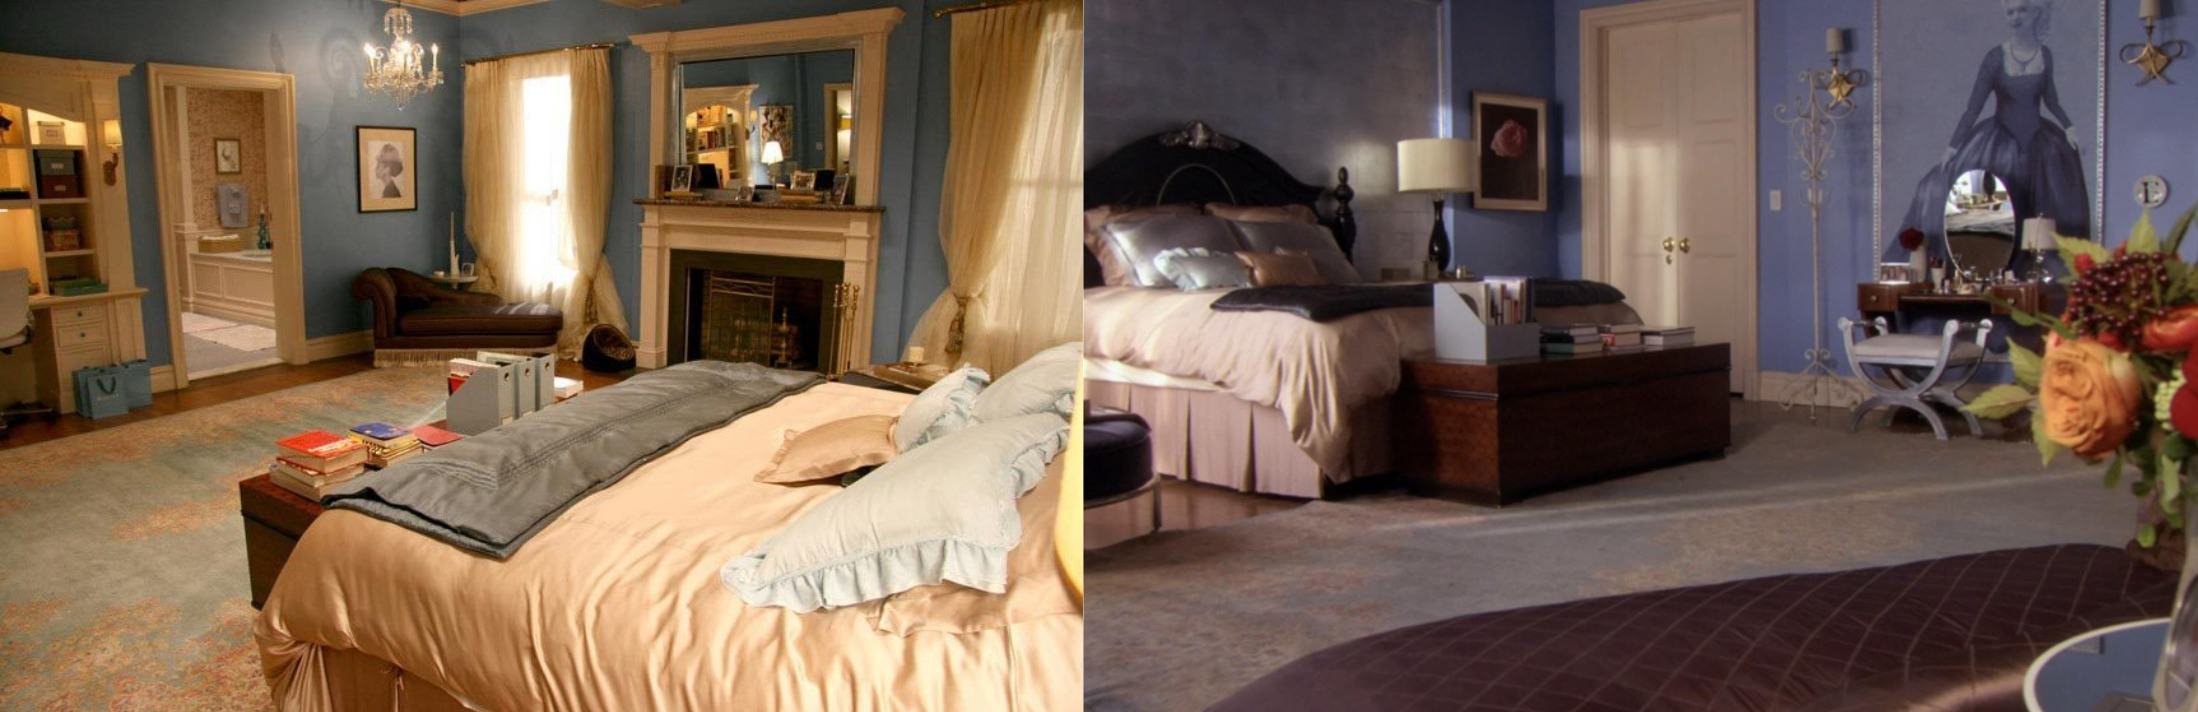 Blair Waldorf plazacore aesthetic bedroom inspo